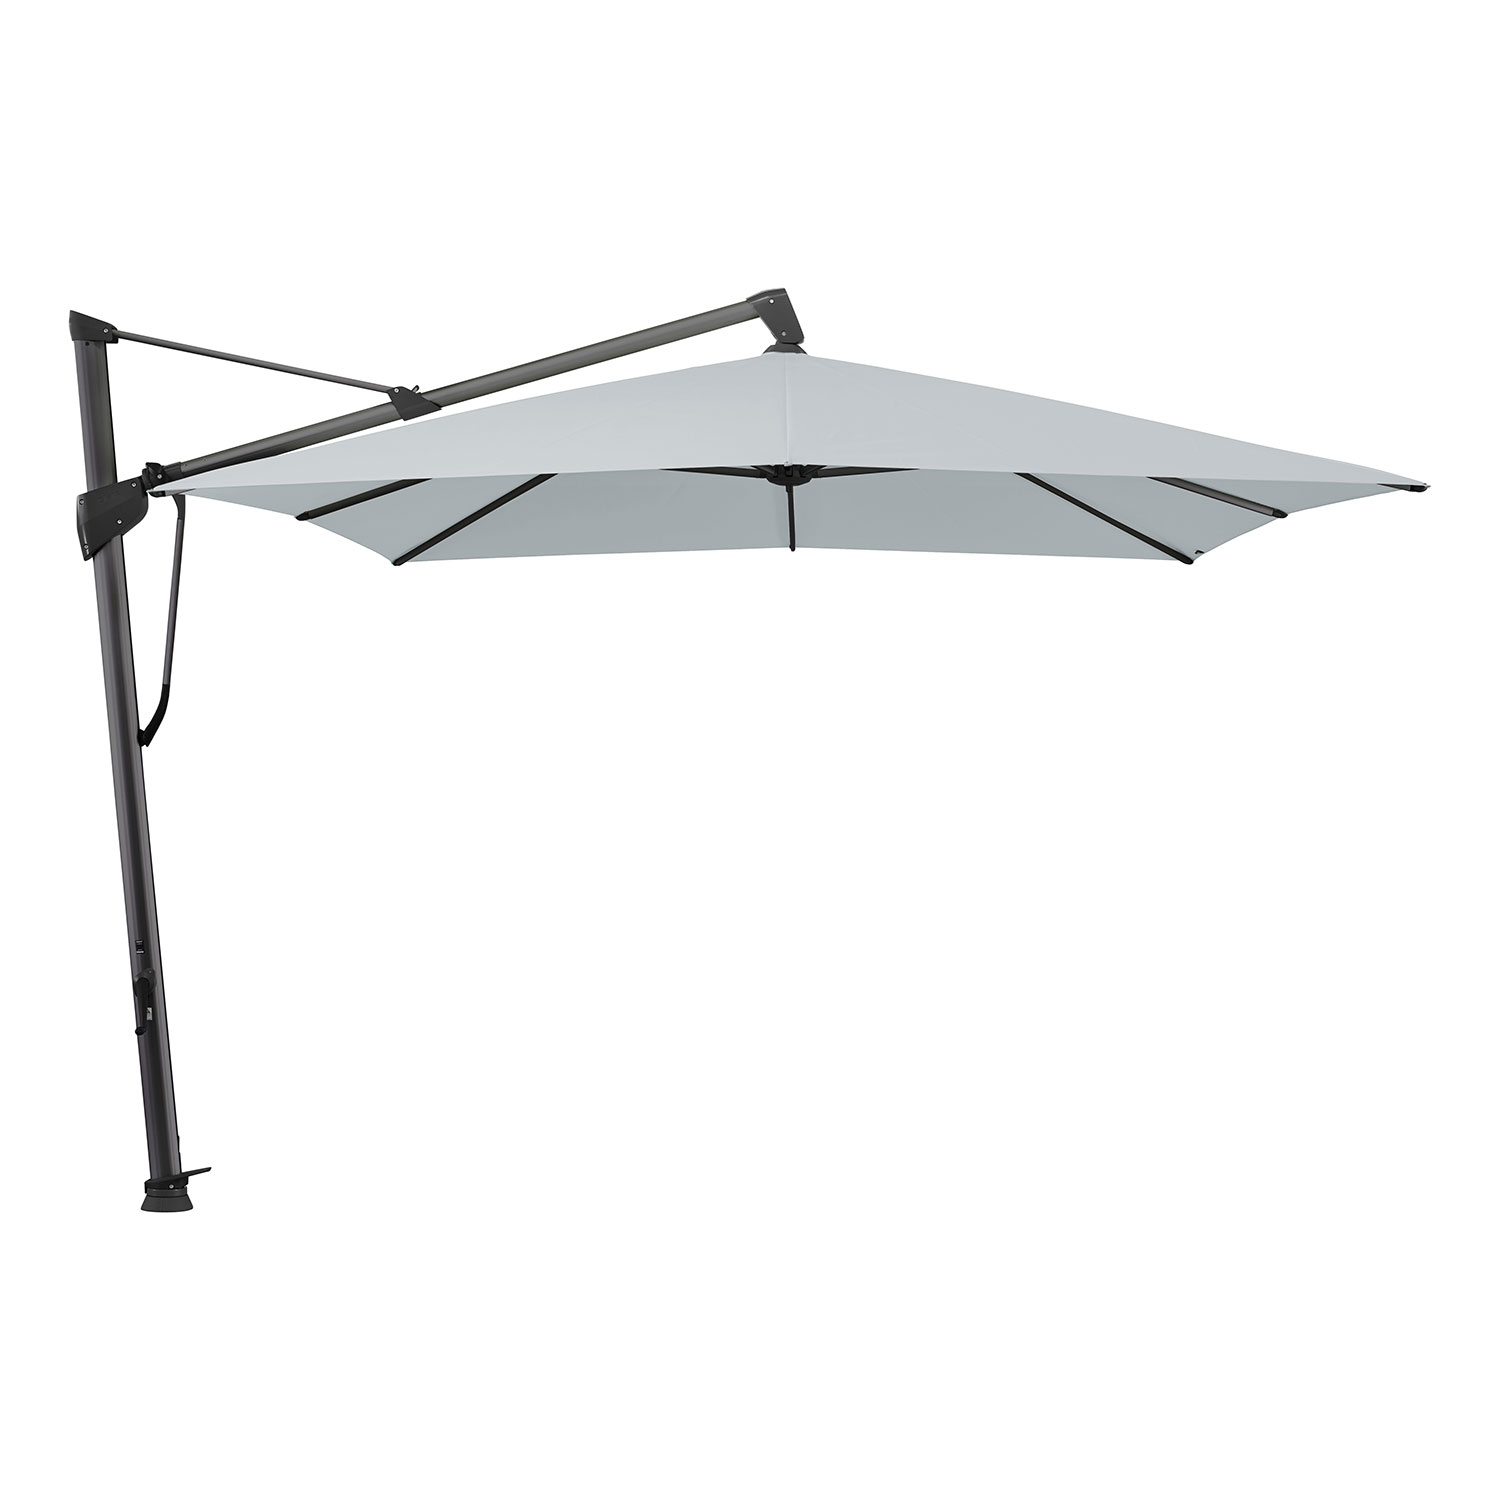 Sombrano S+ frihängande parasoll 400×300 cm kat.5 antracite alu / 665 chrome